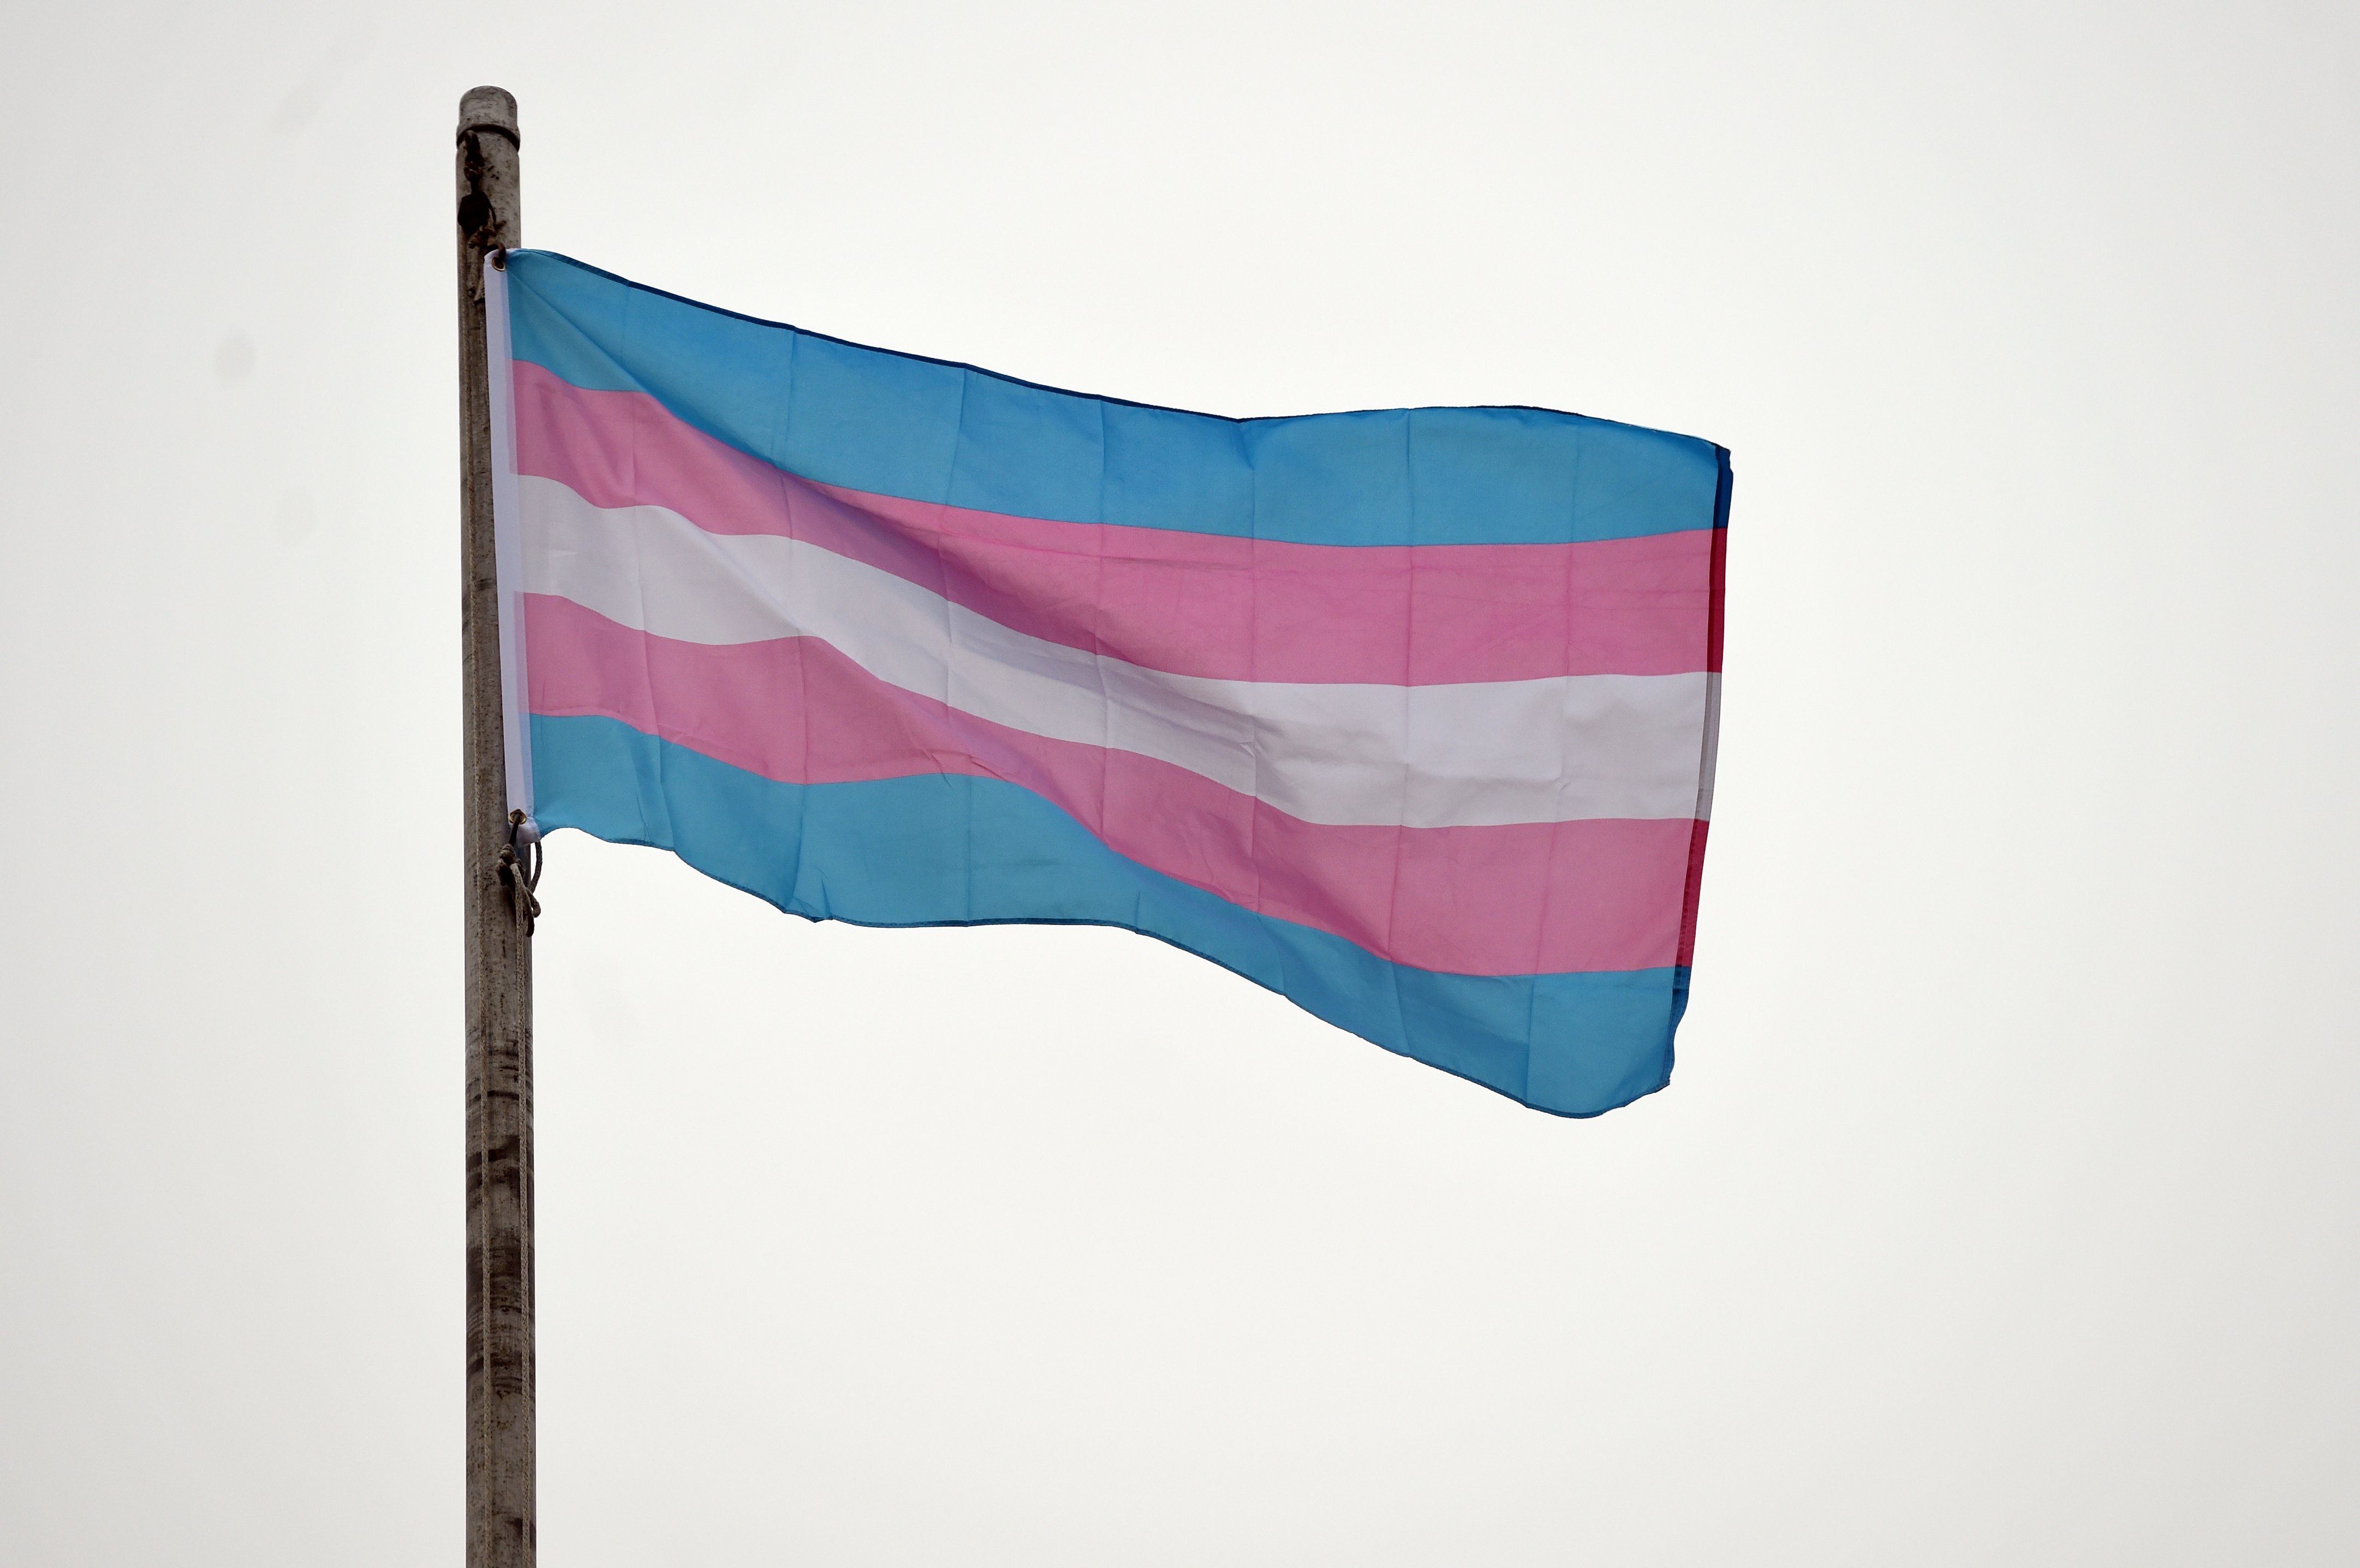 Washtenaw County will raise transgender pride flag, create 'gender